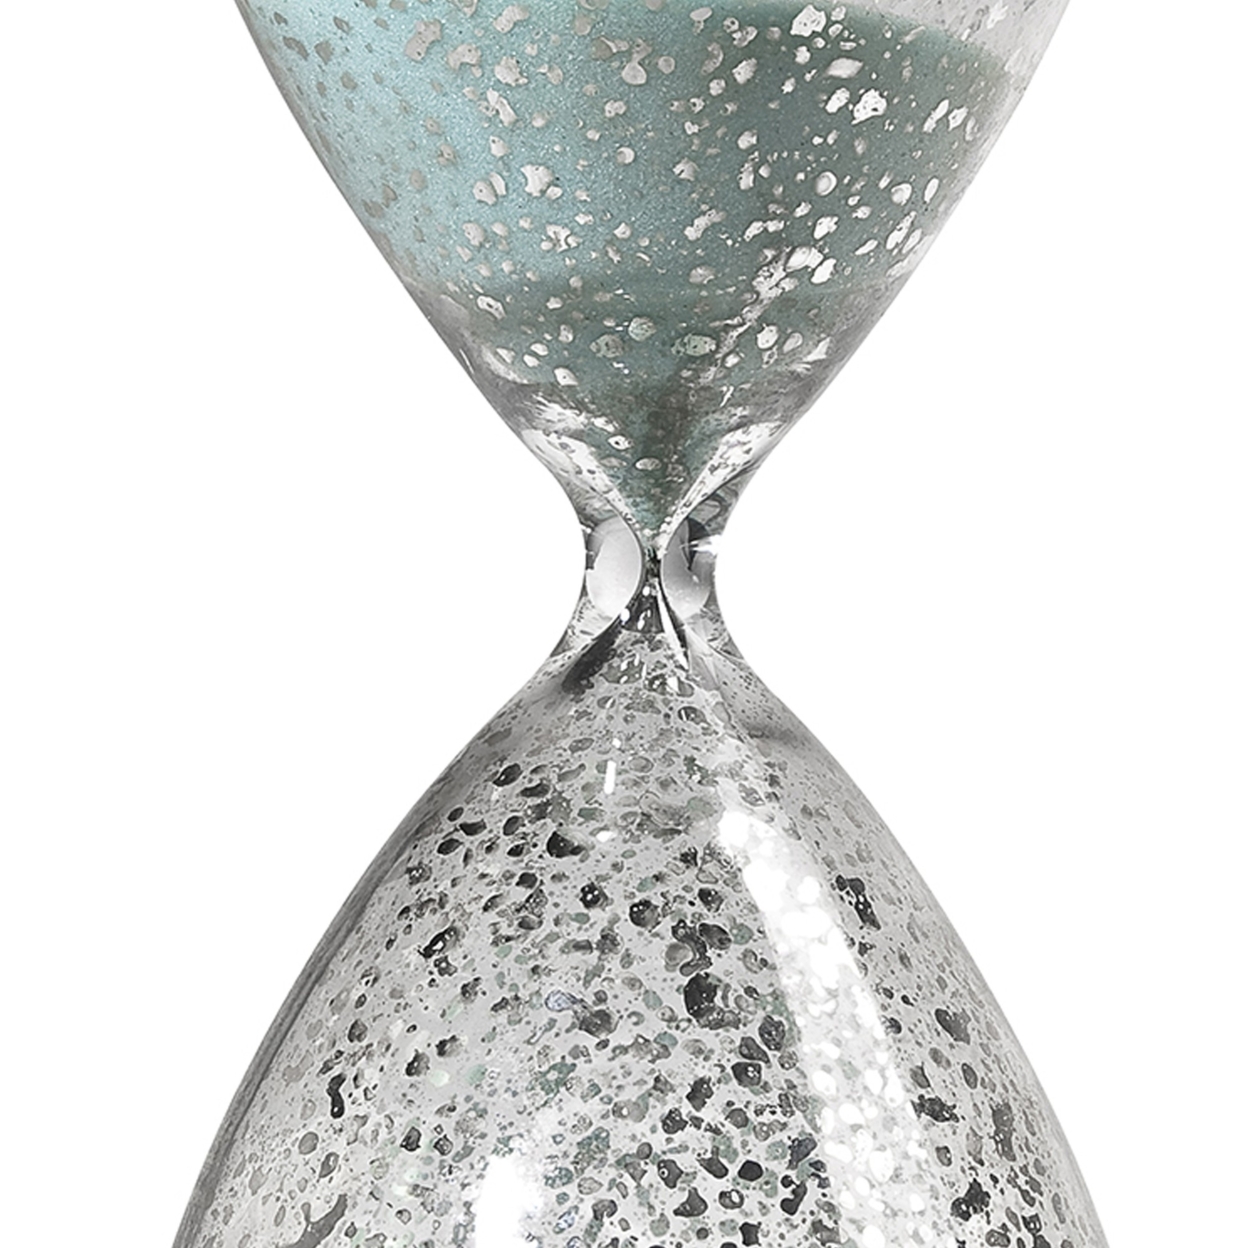 Doug 10 Inch Decorative 60 Minute Hourglass Accent Decor, Teal Blue Sand- Saltoro Sherpi